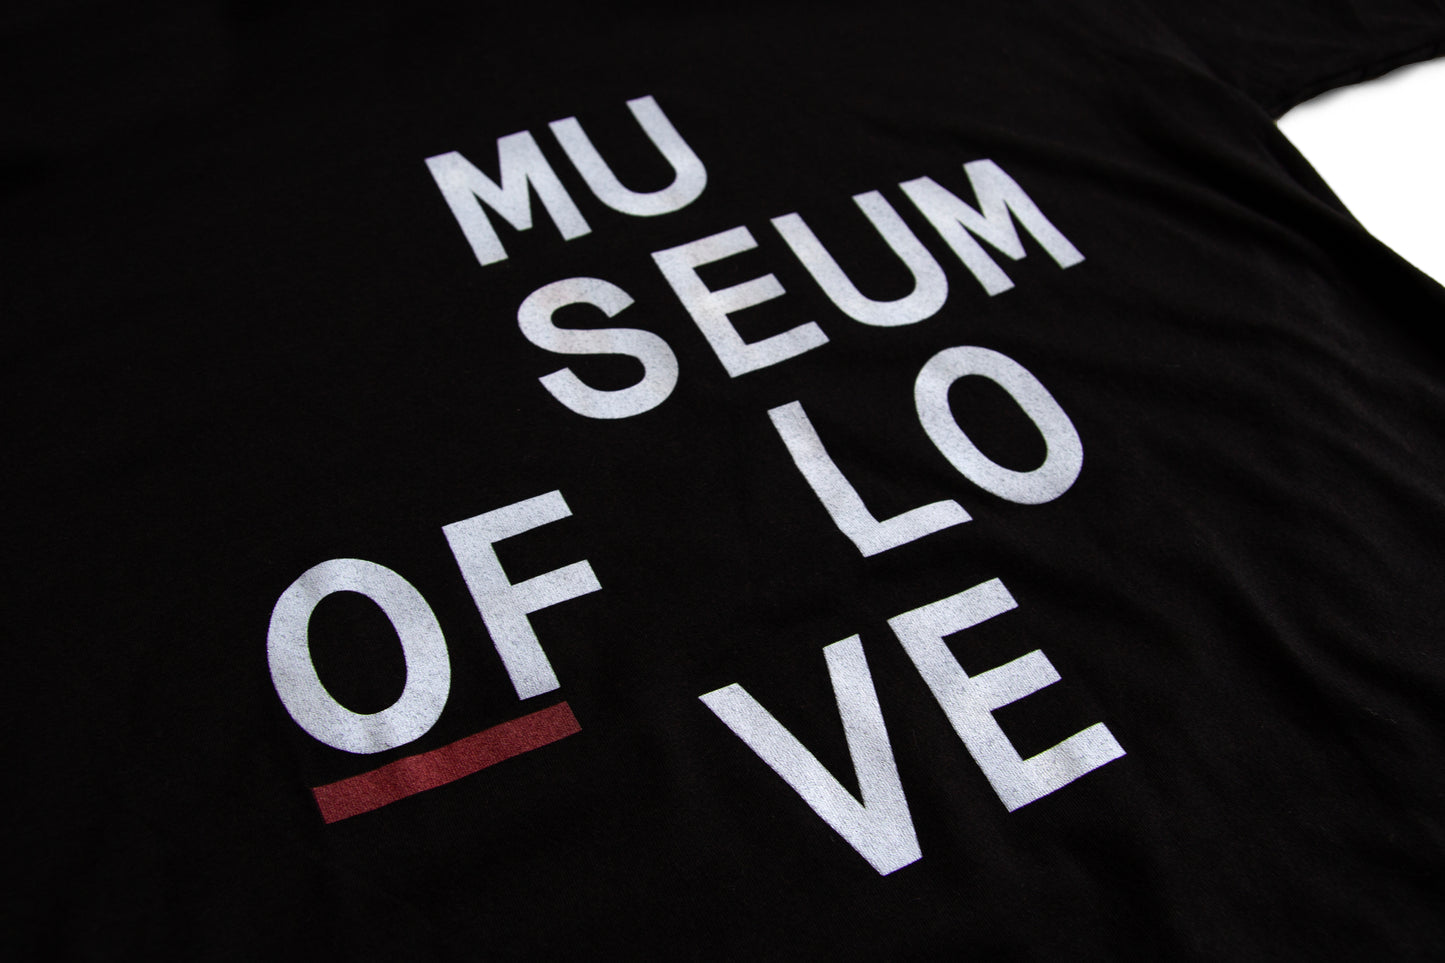 Museum of Love